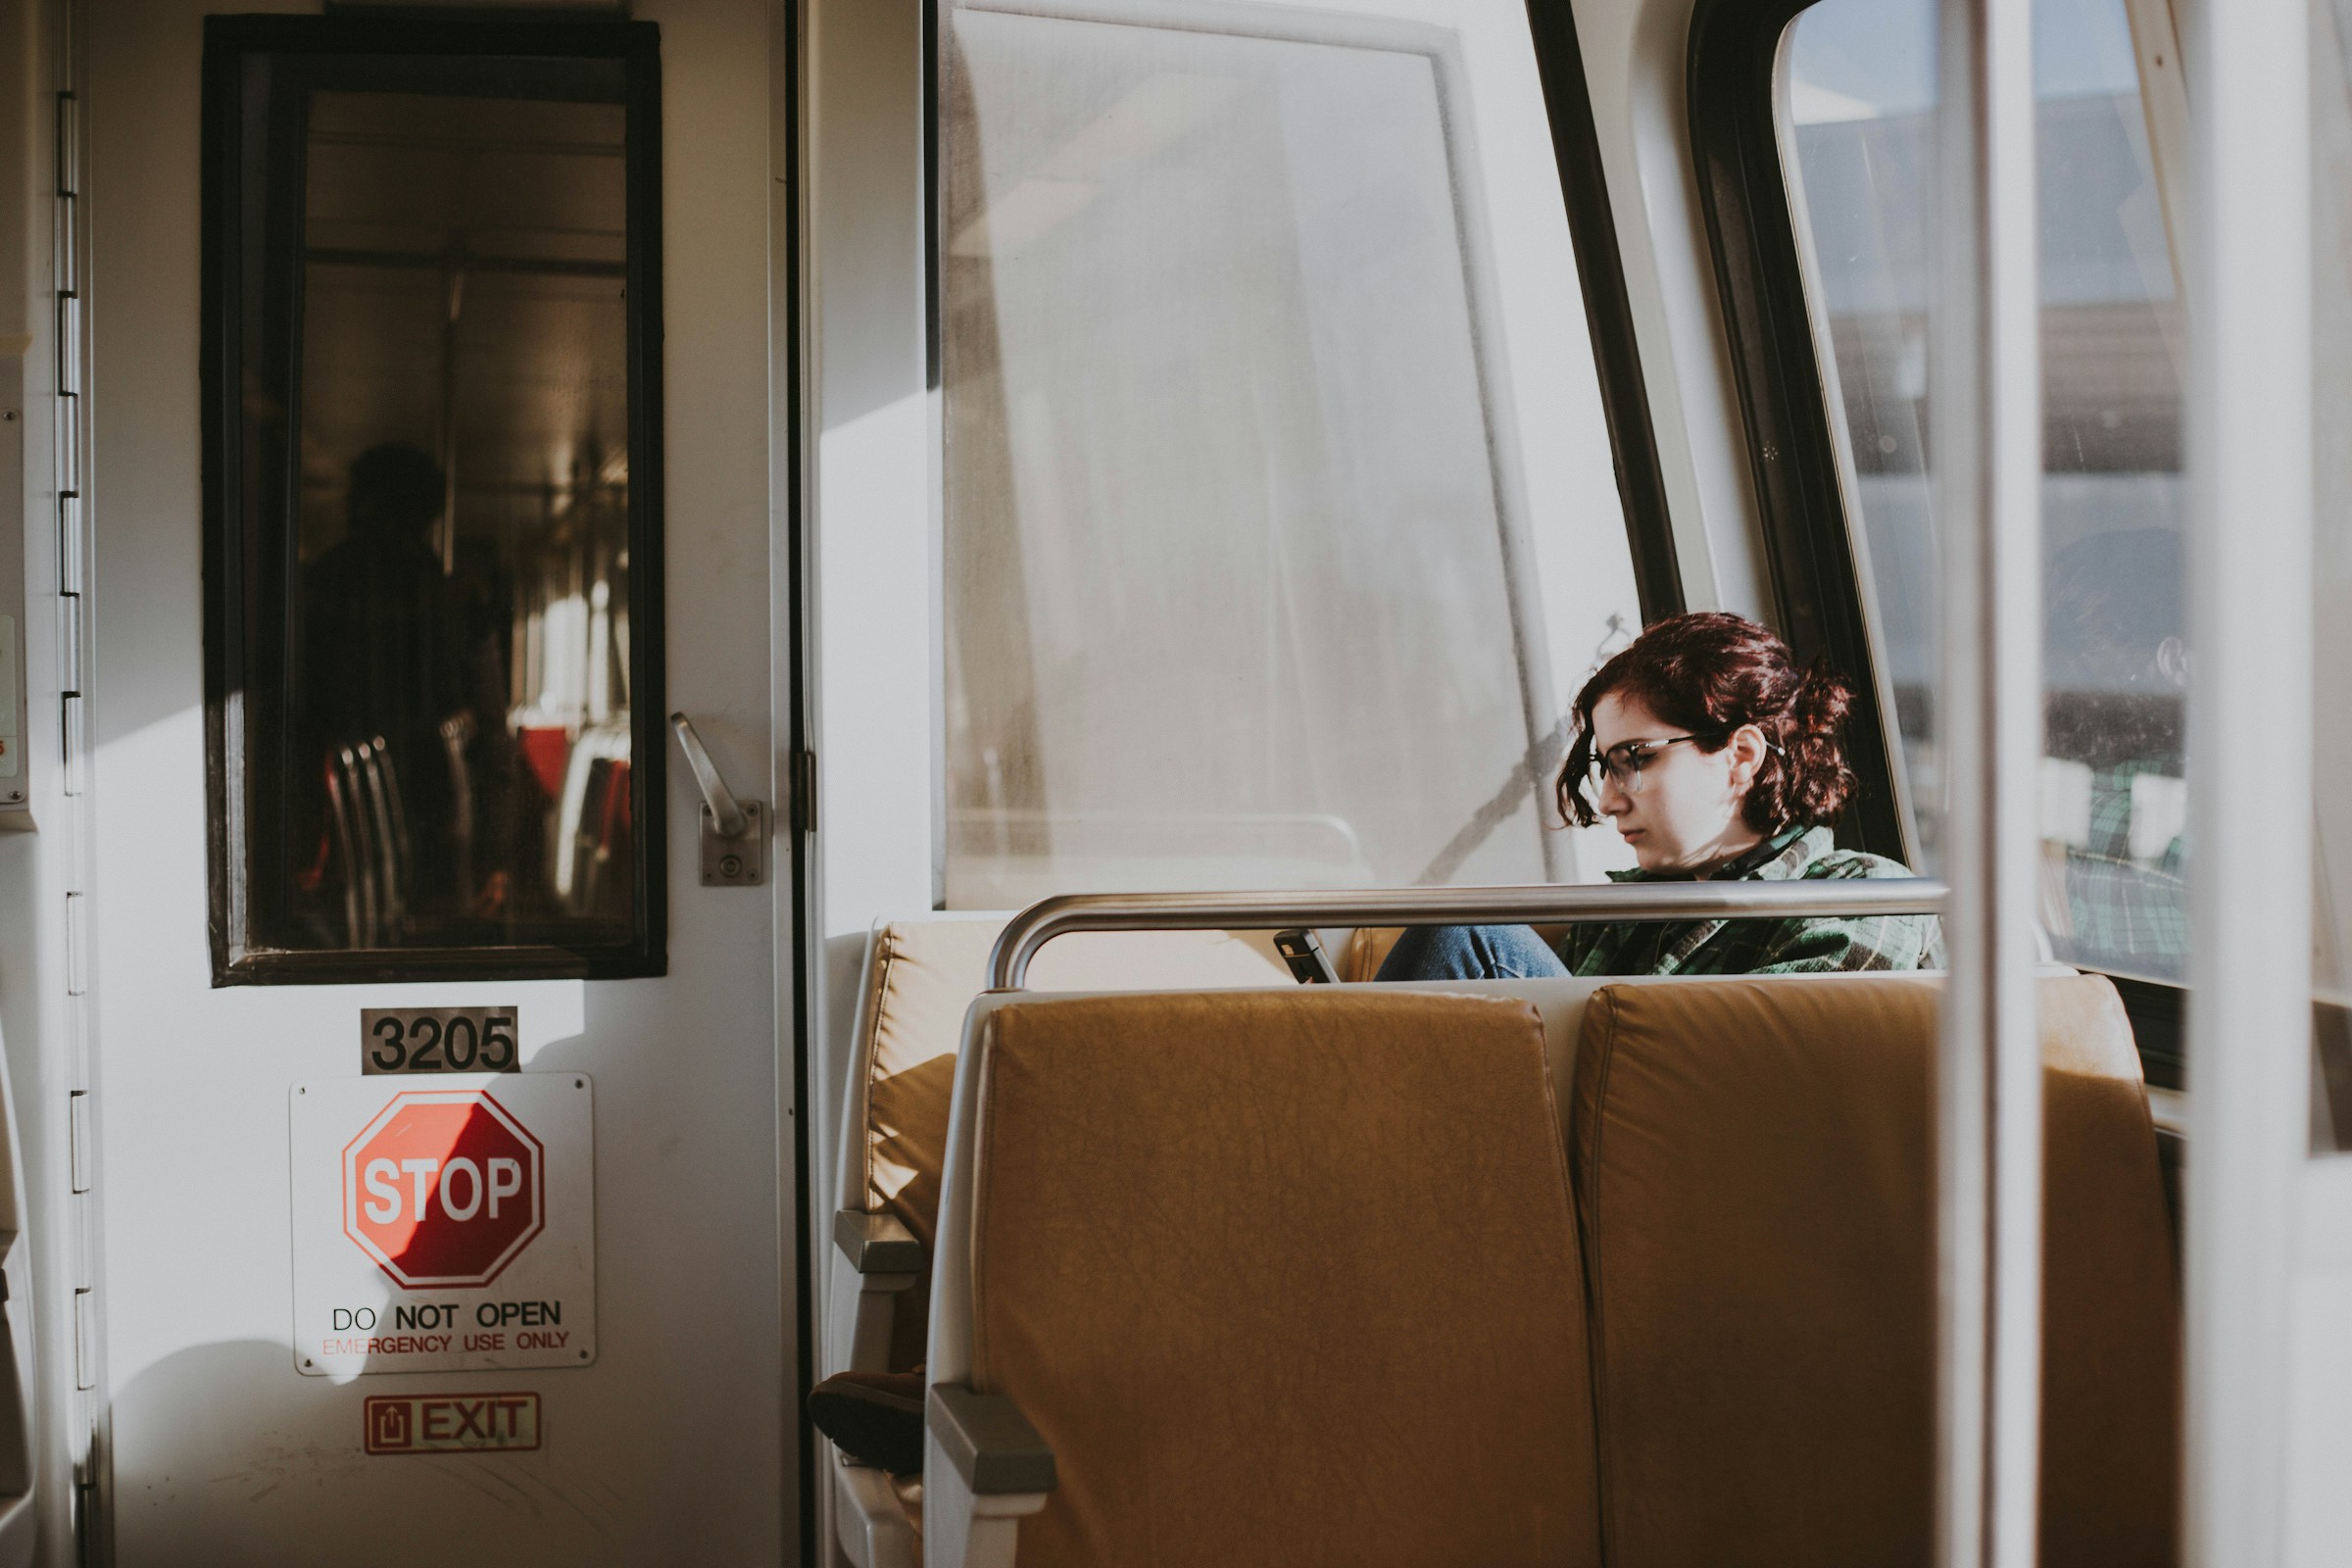 A woman sitting in a train | Source: Unsplash